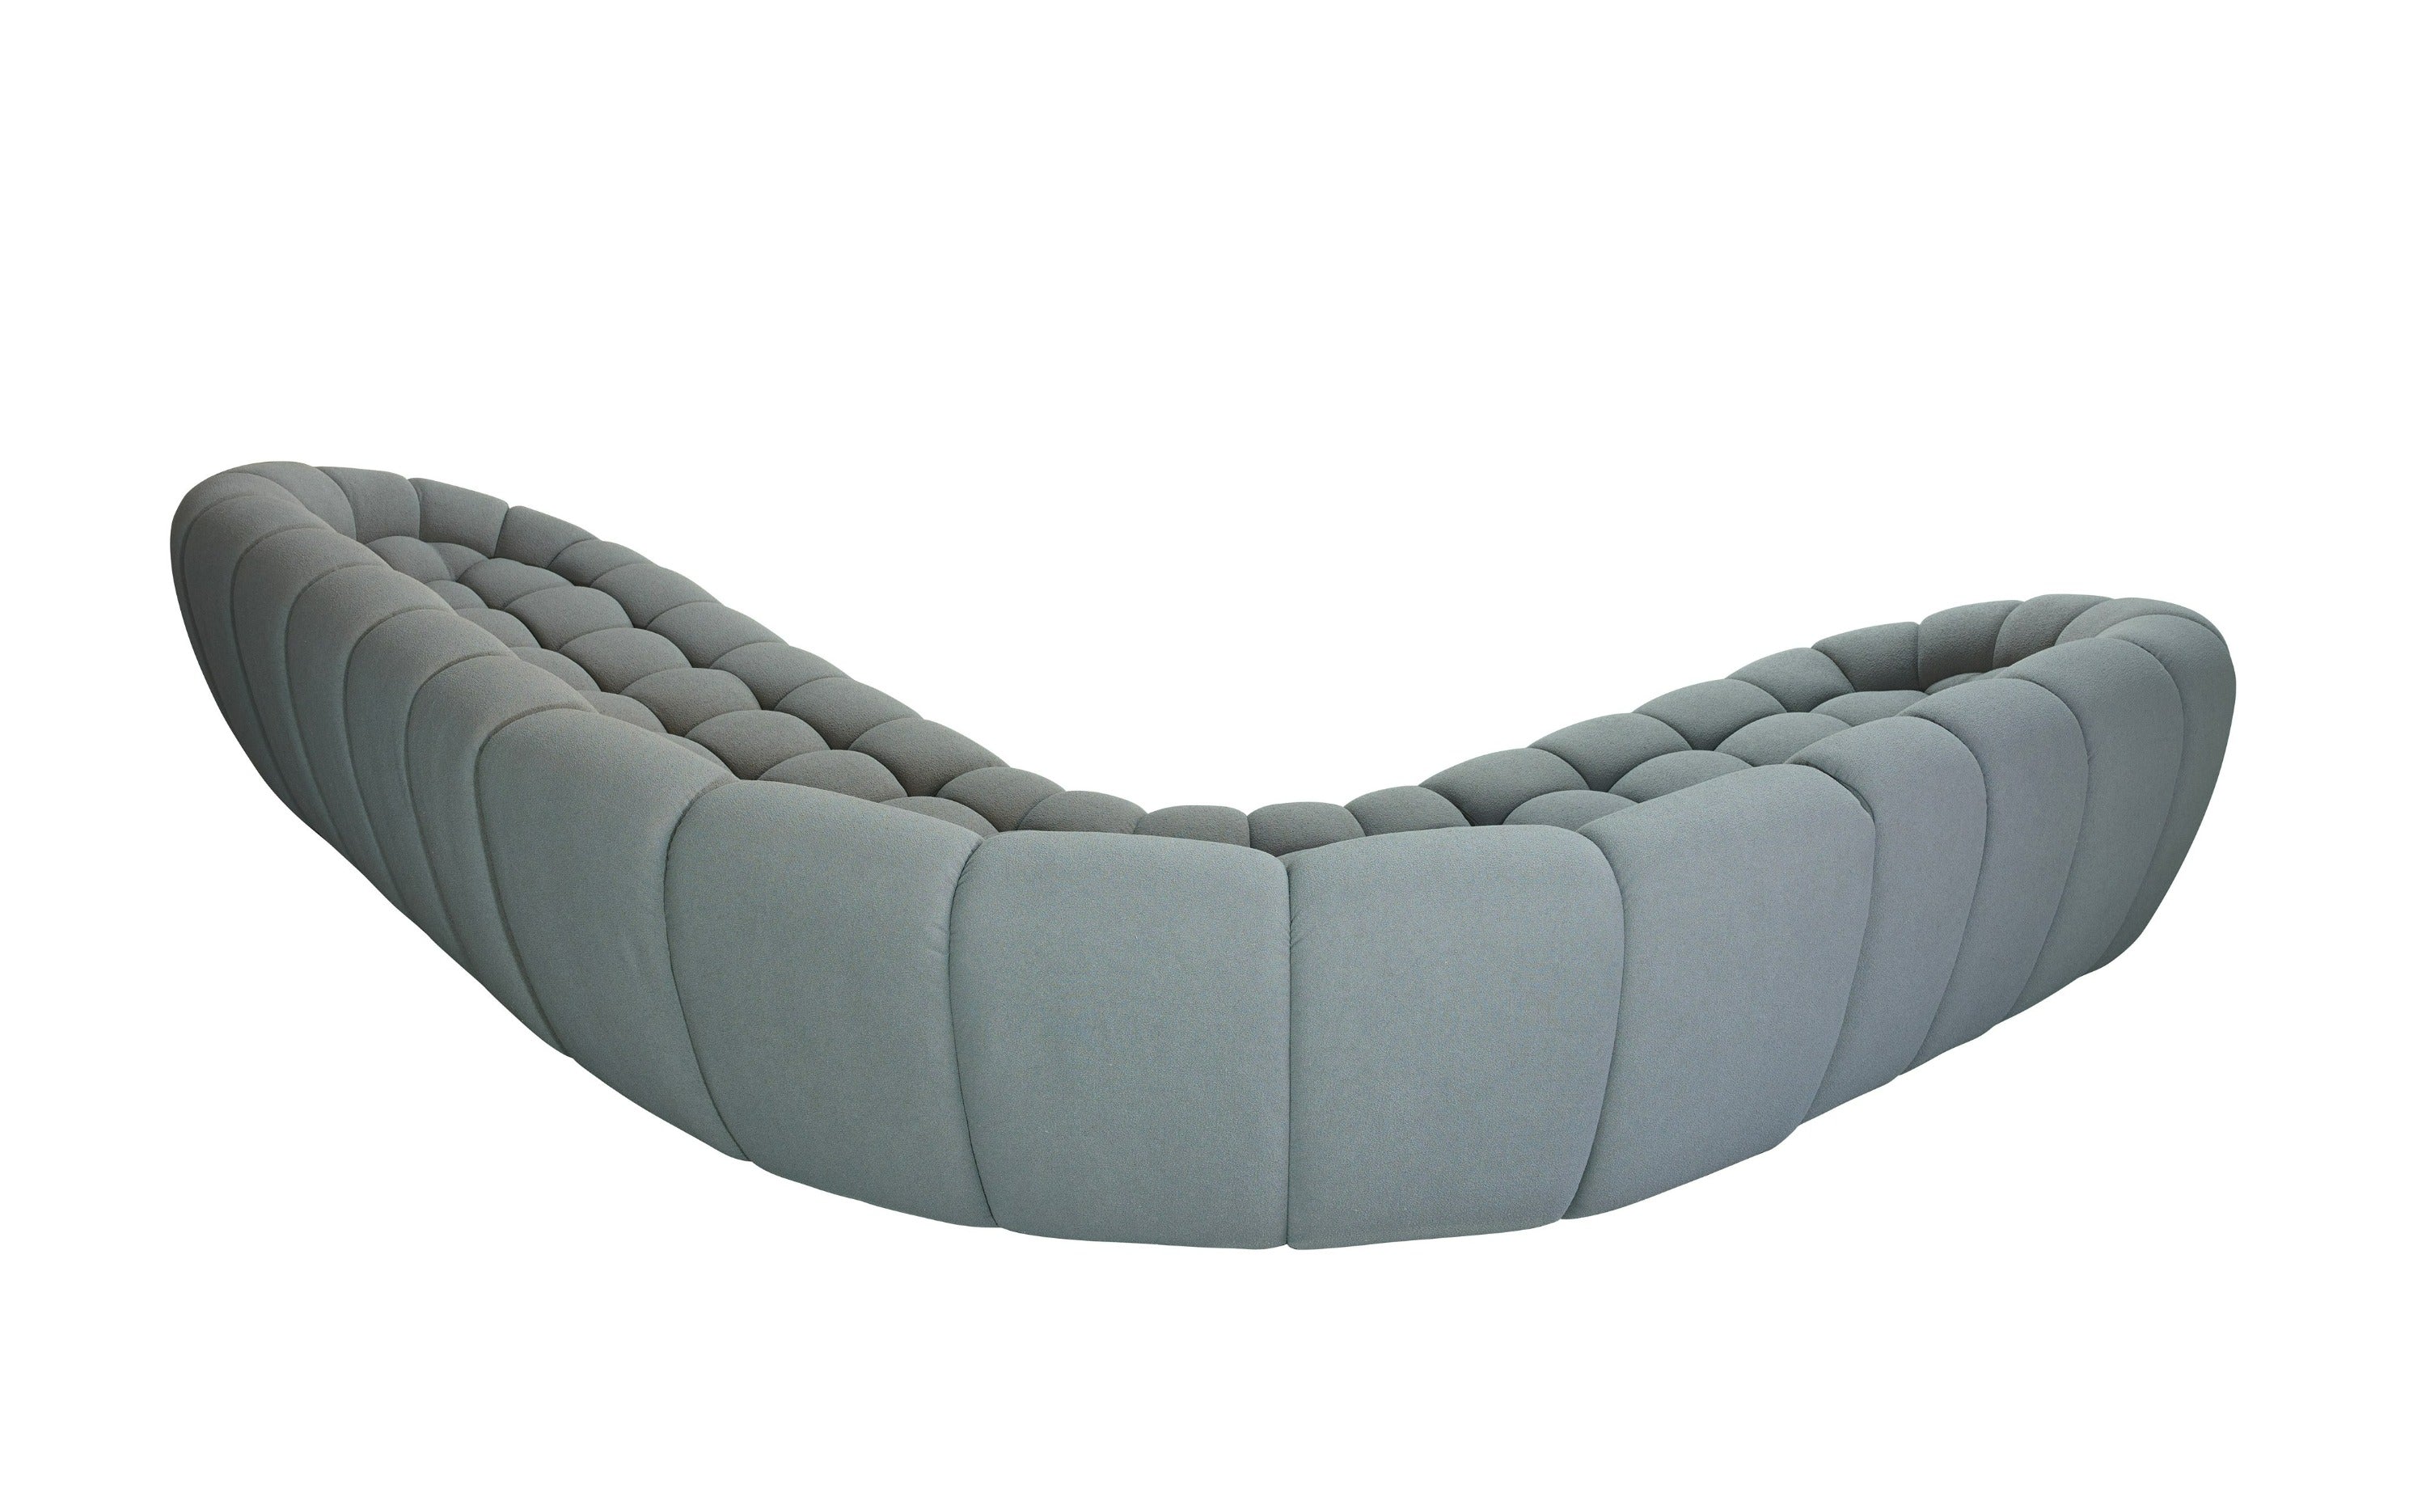 Divani Casa Yolonda - Modern Curved Sectional Sofa-Sectional Sofa-VIG-Wall2Wall Furnishings